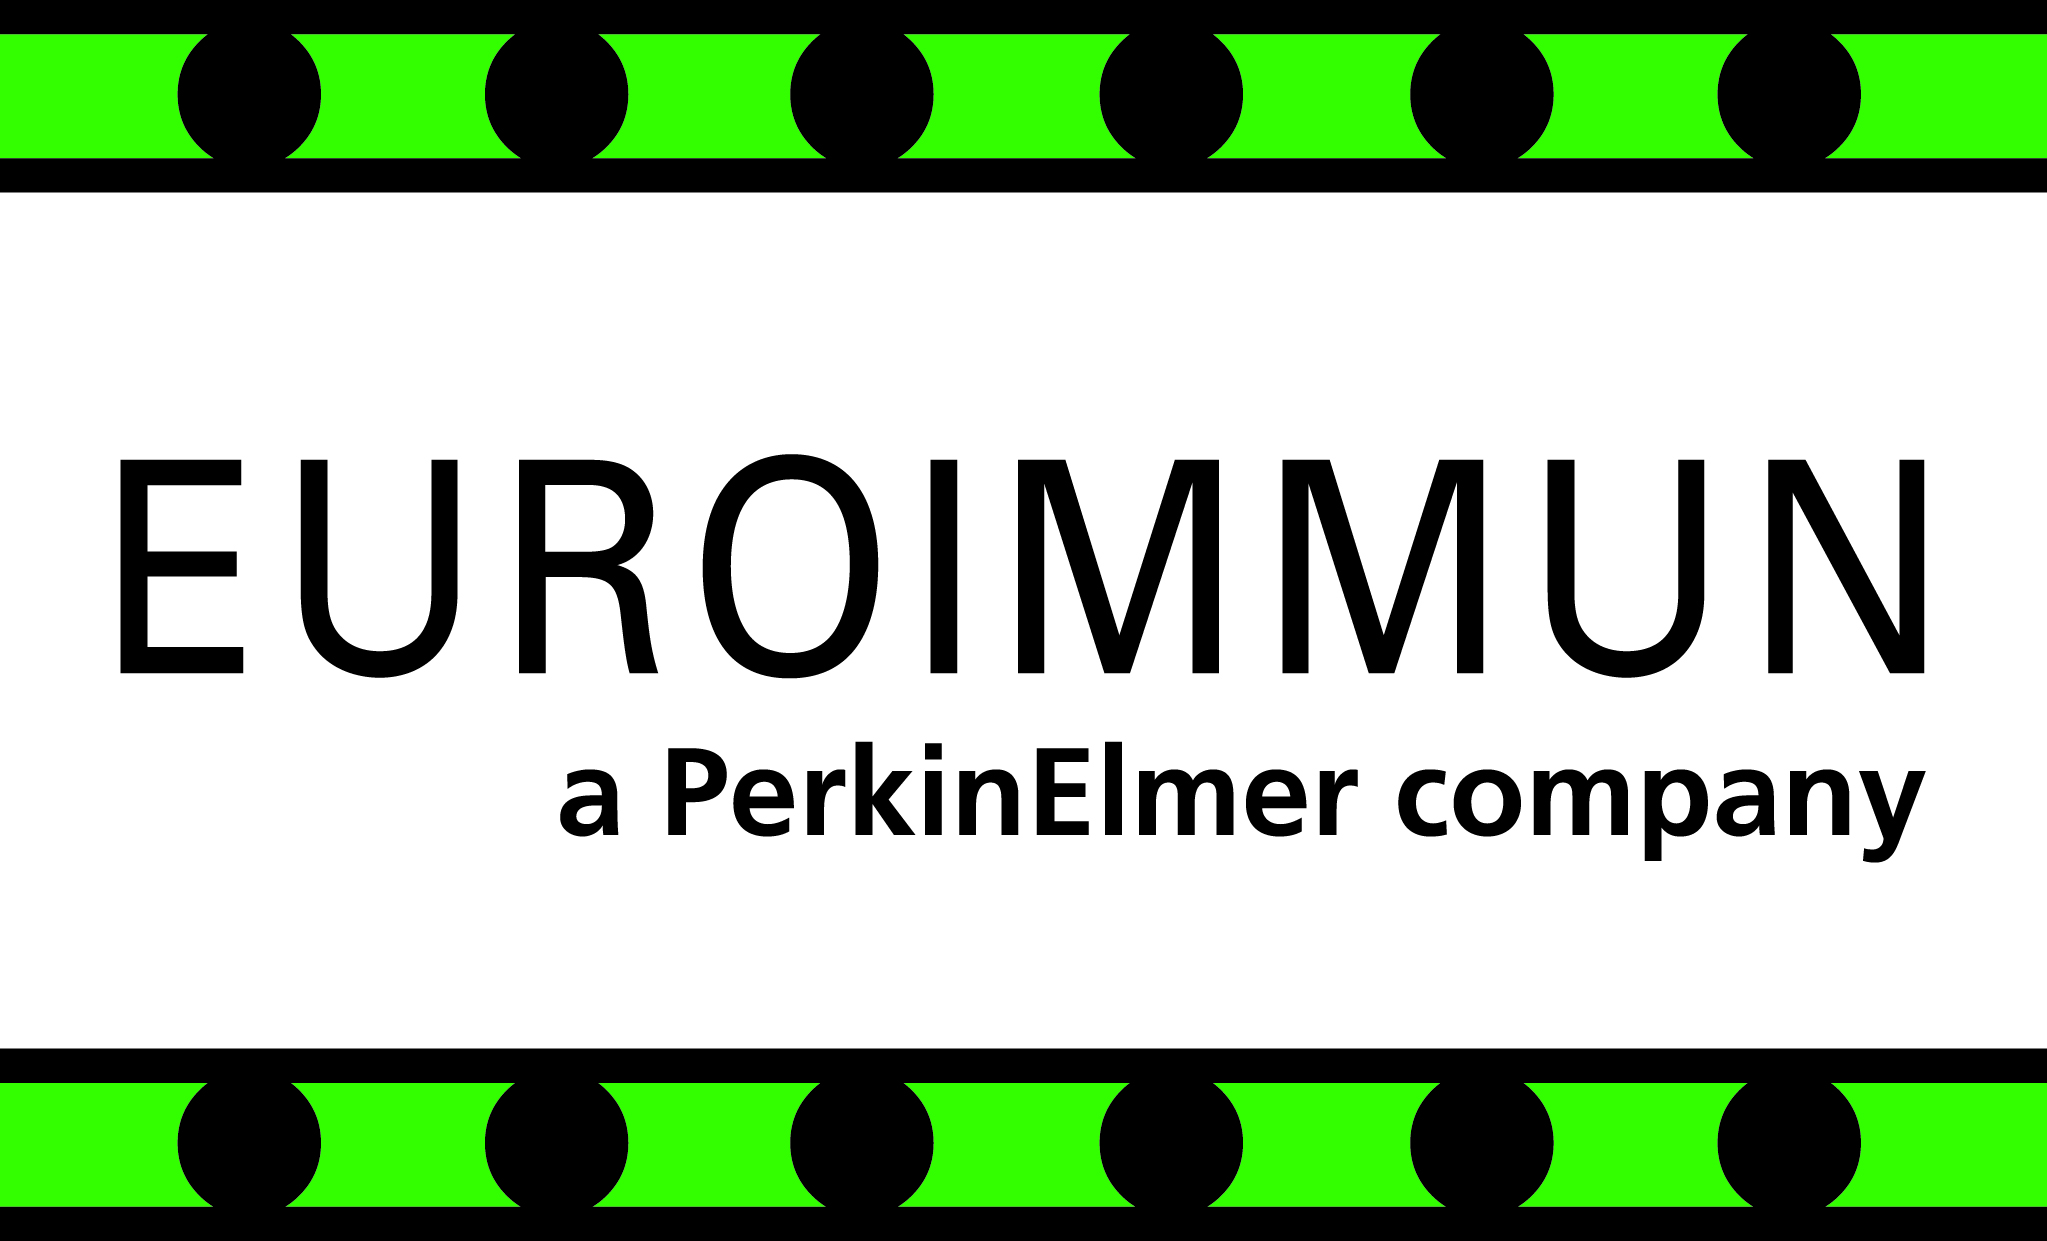 EUROIMMUN PE compact logo_CMYK.jpg